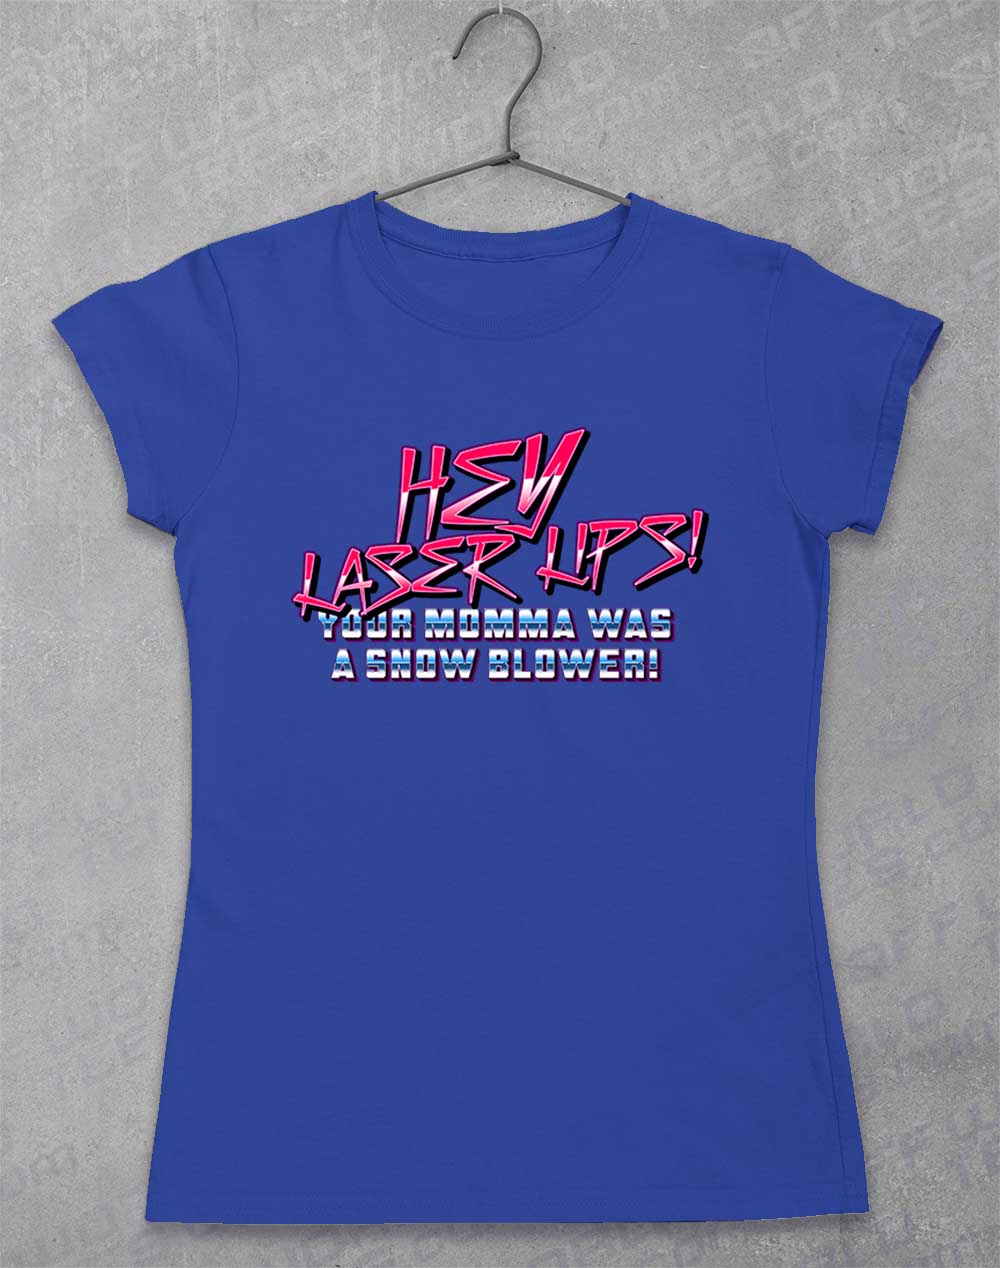 Royal - Hey Laser Lips Women's T-Shirt